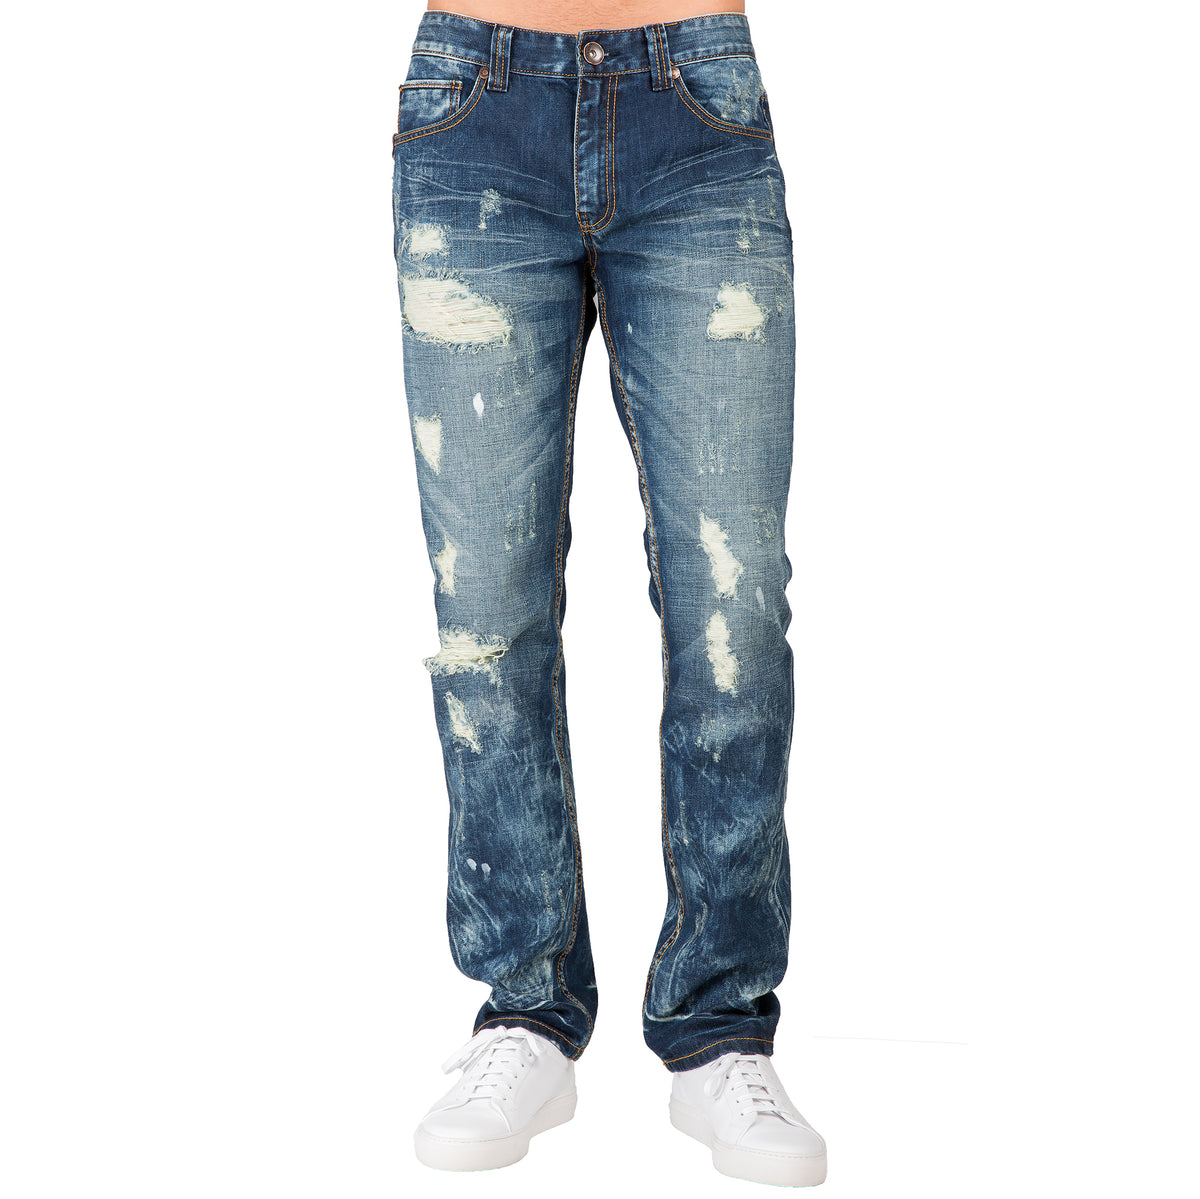 Express Boyfriend Distressed Destroyed Bleach Stains Jeans Size 4